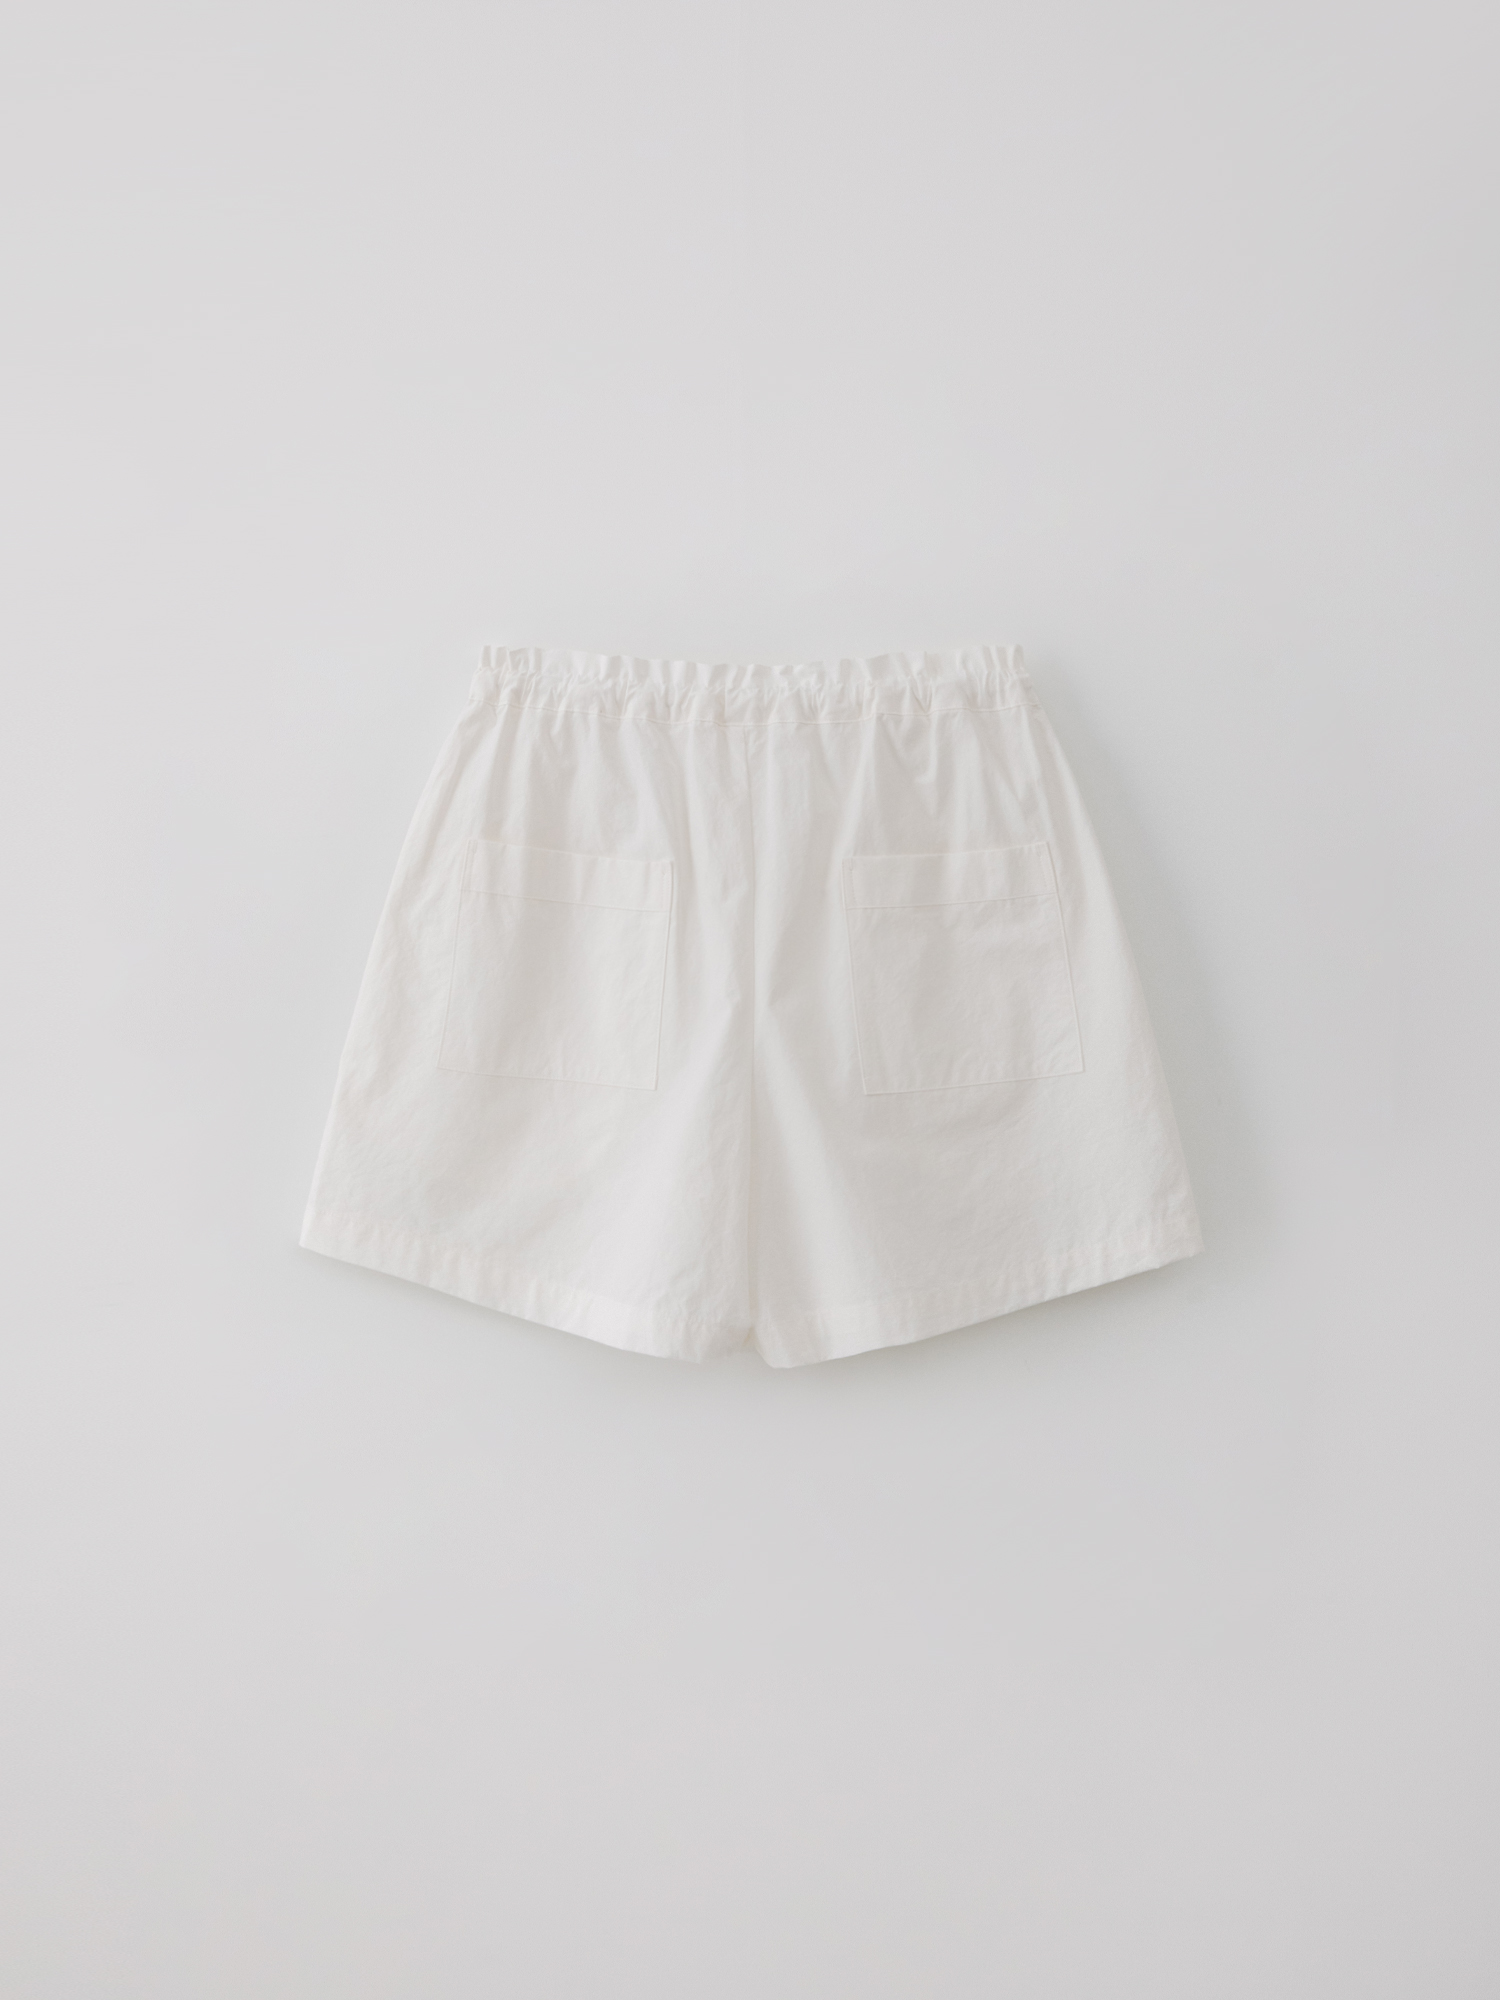 Wide cotton shorts (white)